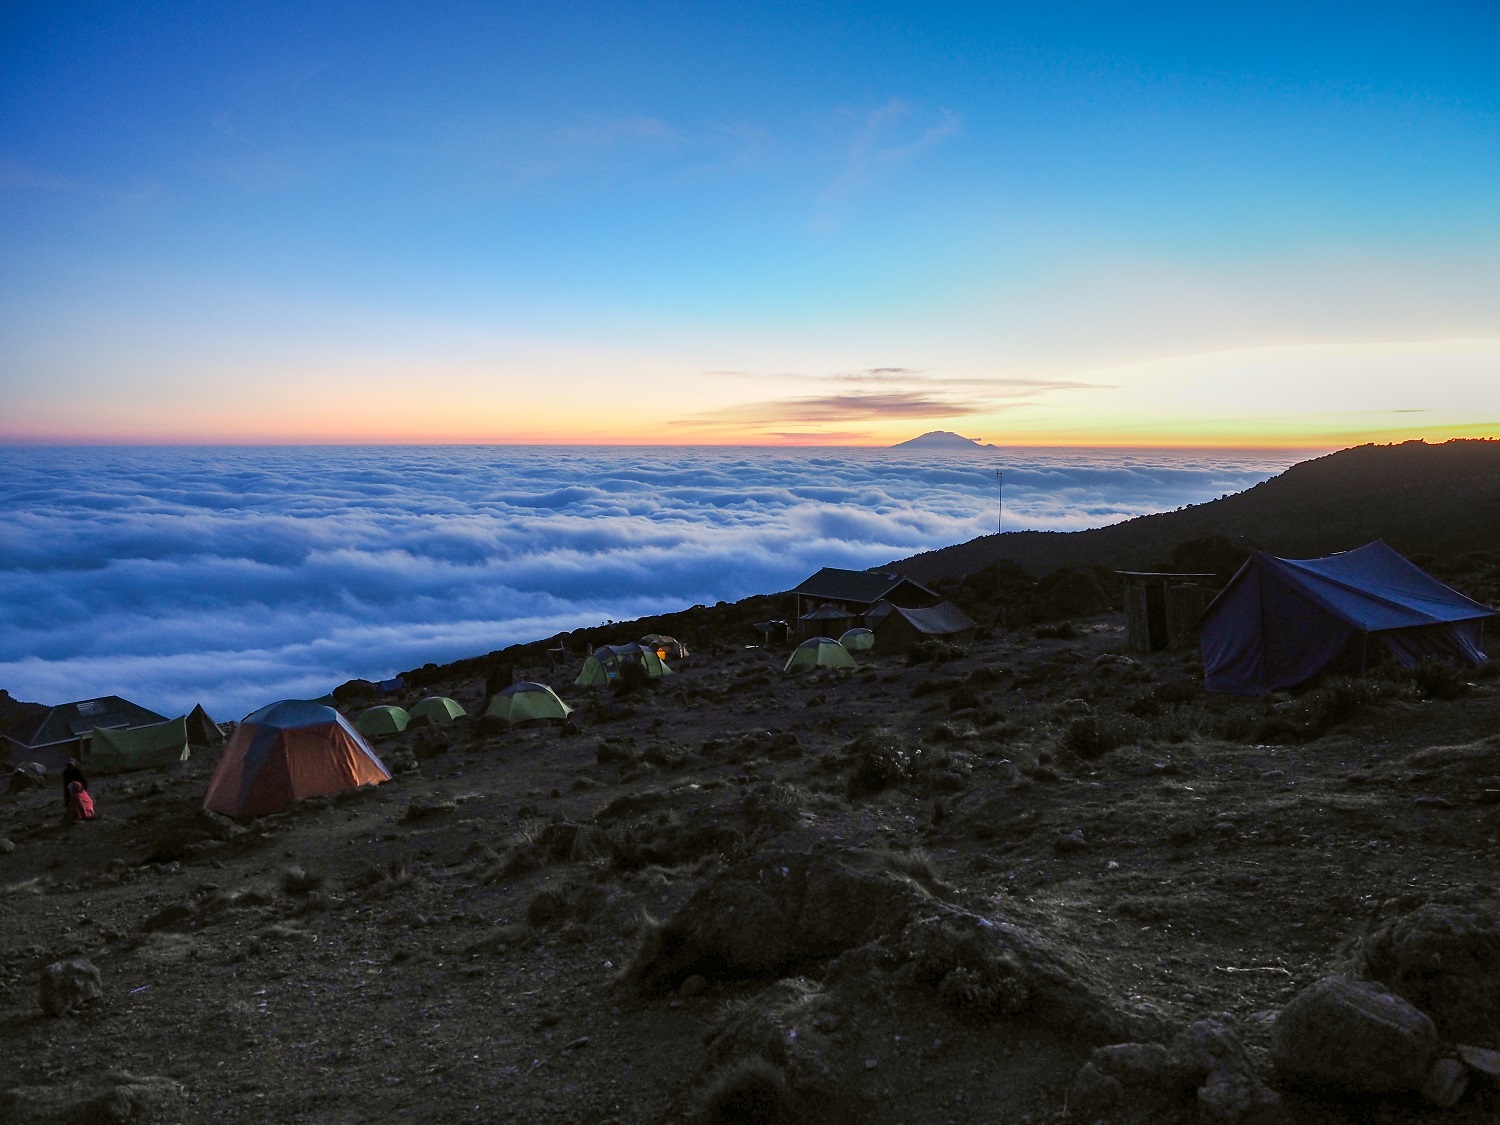 Campsite on Mount Kilimanjaro. Shutterstock.